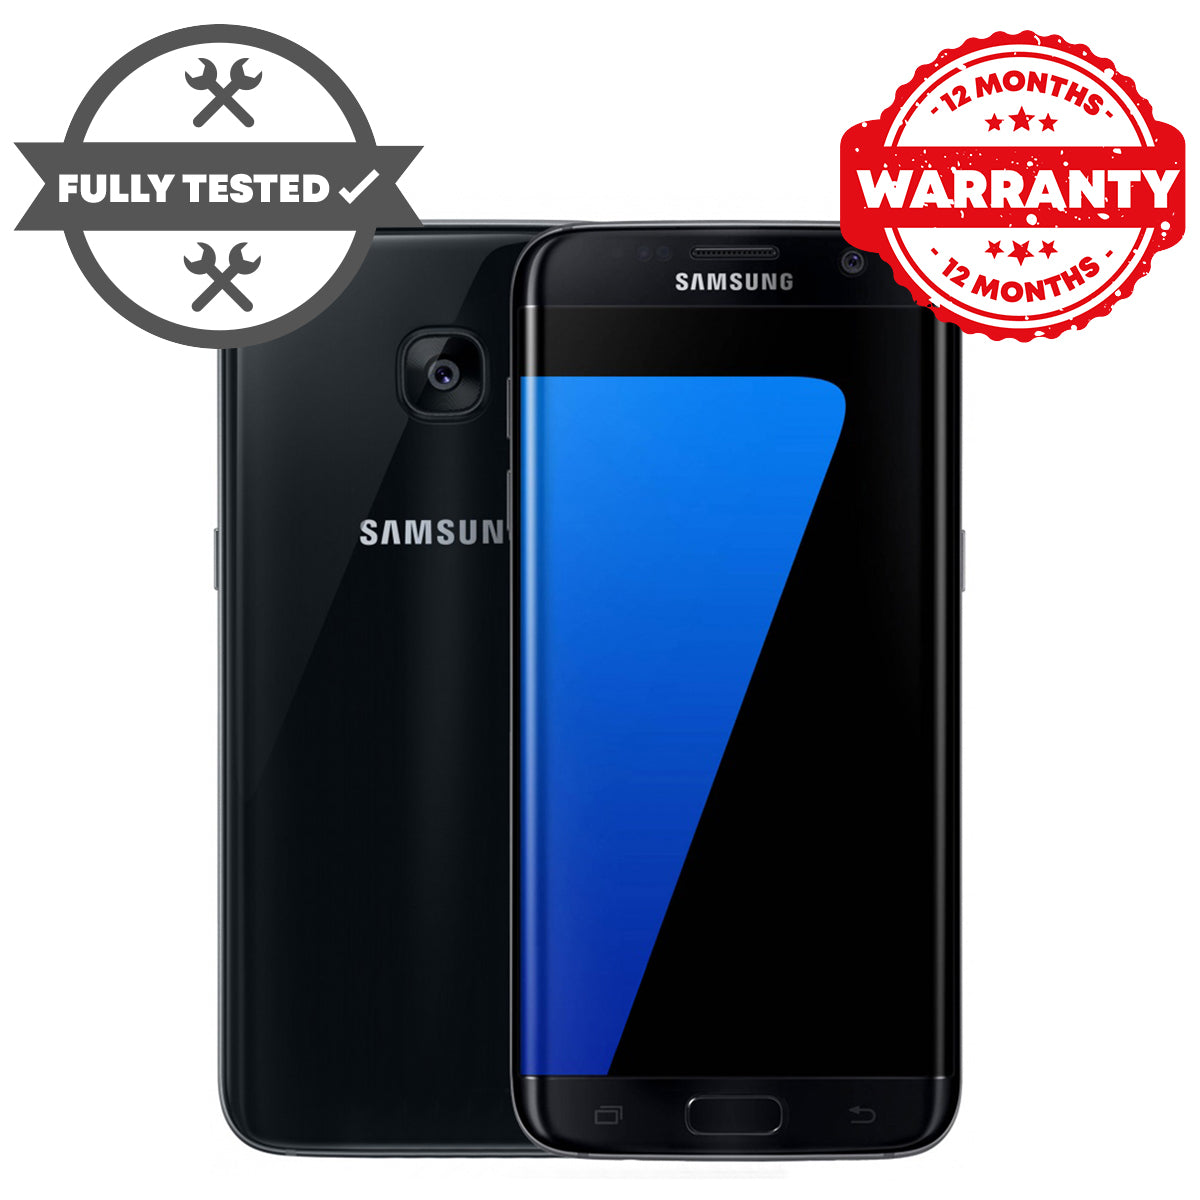 Samsung Galaxy S7 Edge Black  Sim Free - Unlocked